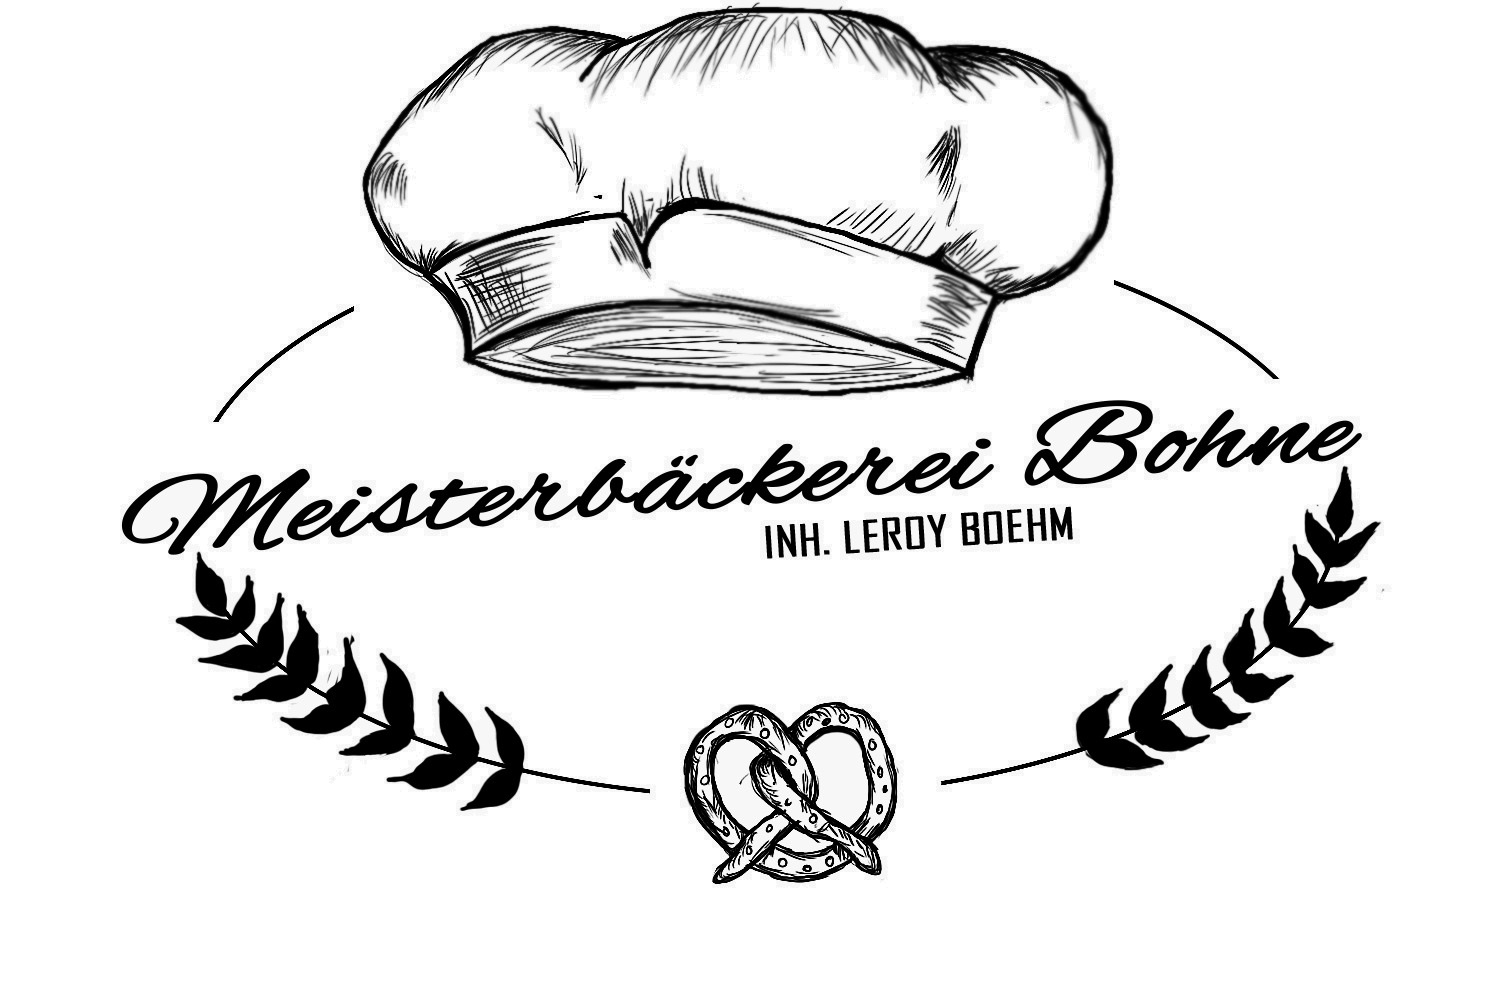 Meisterbäckerei Bohne